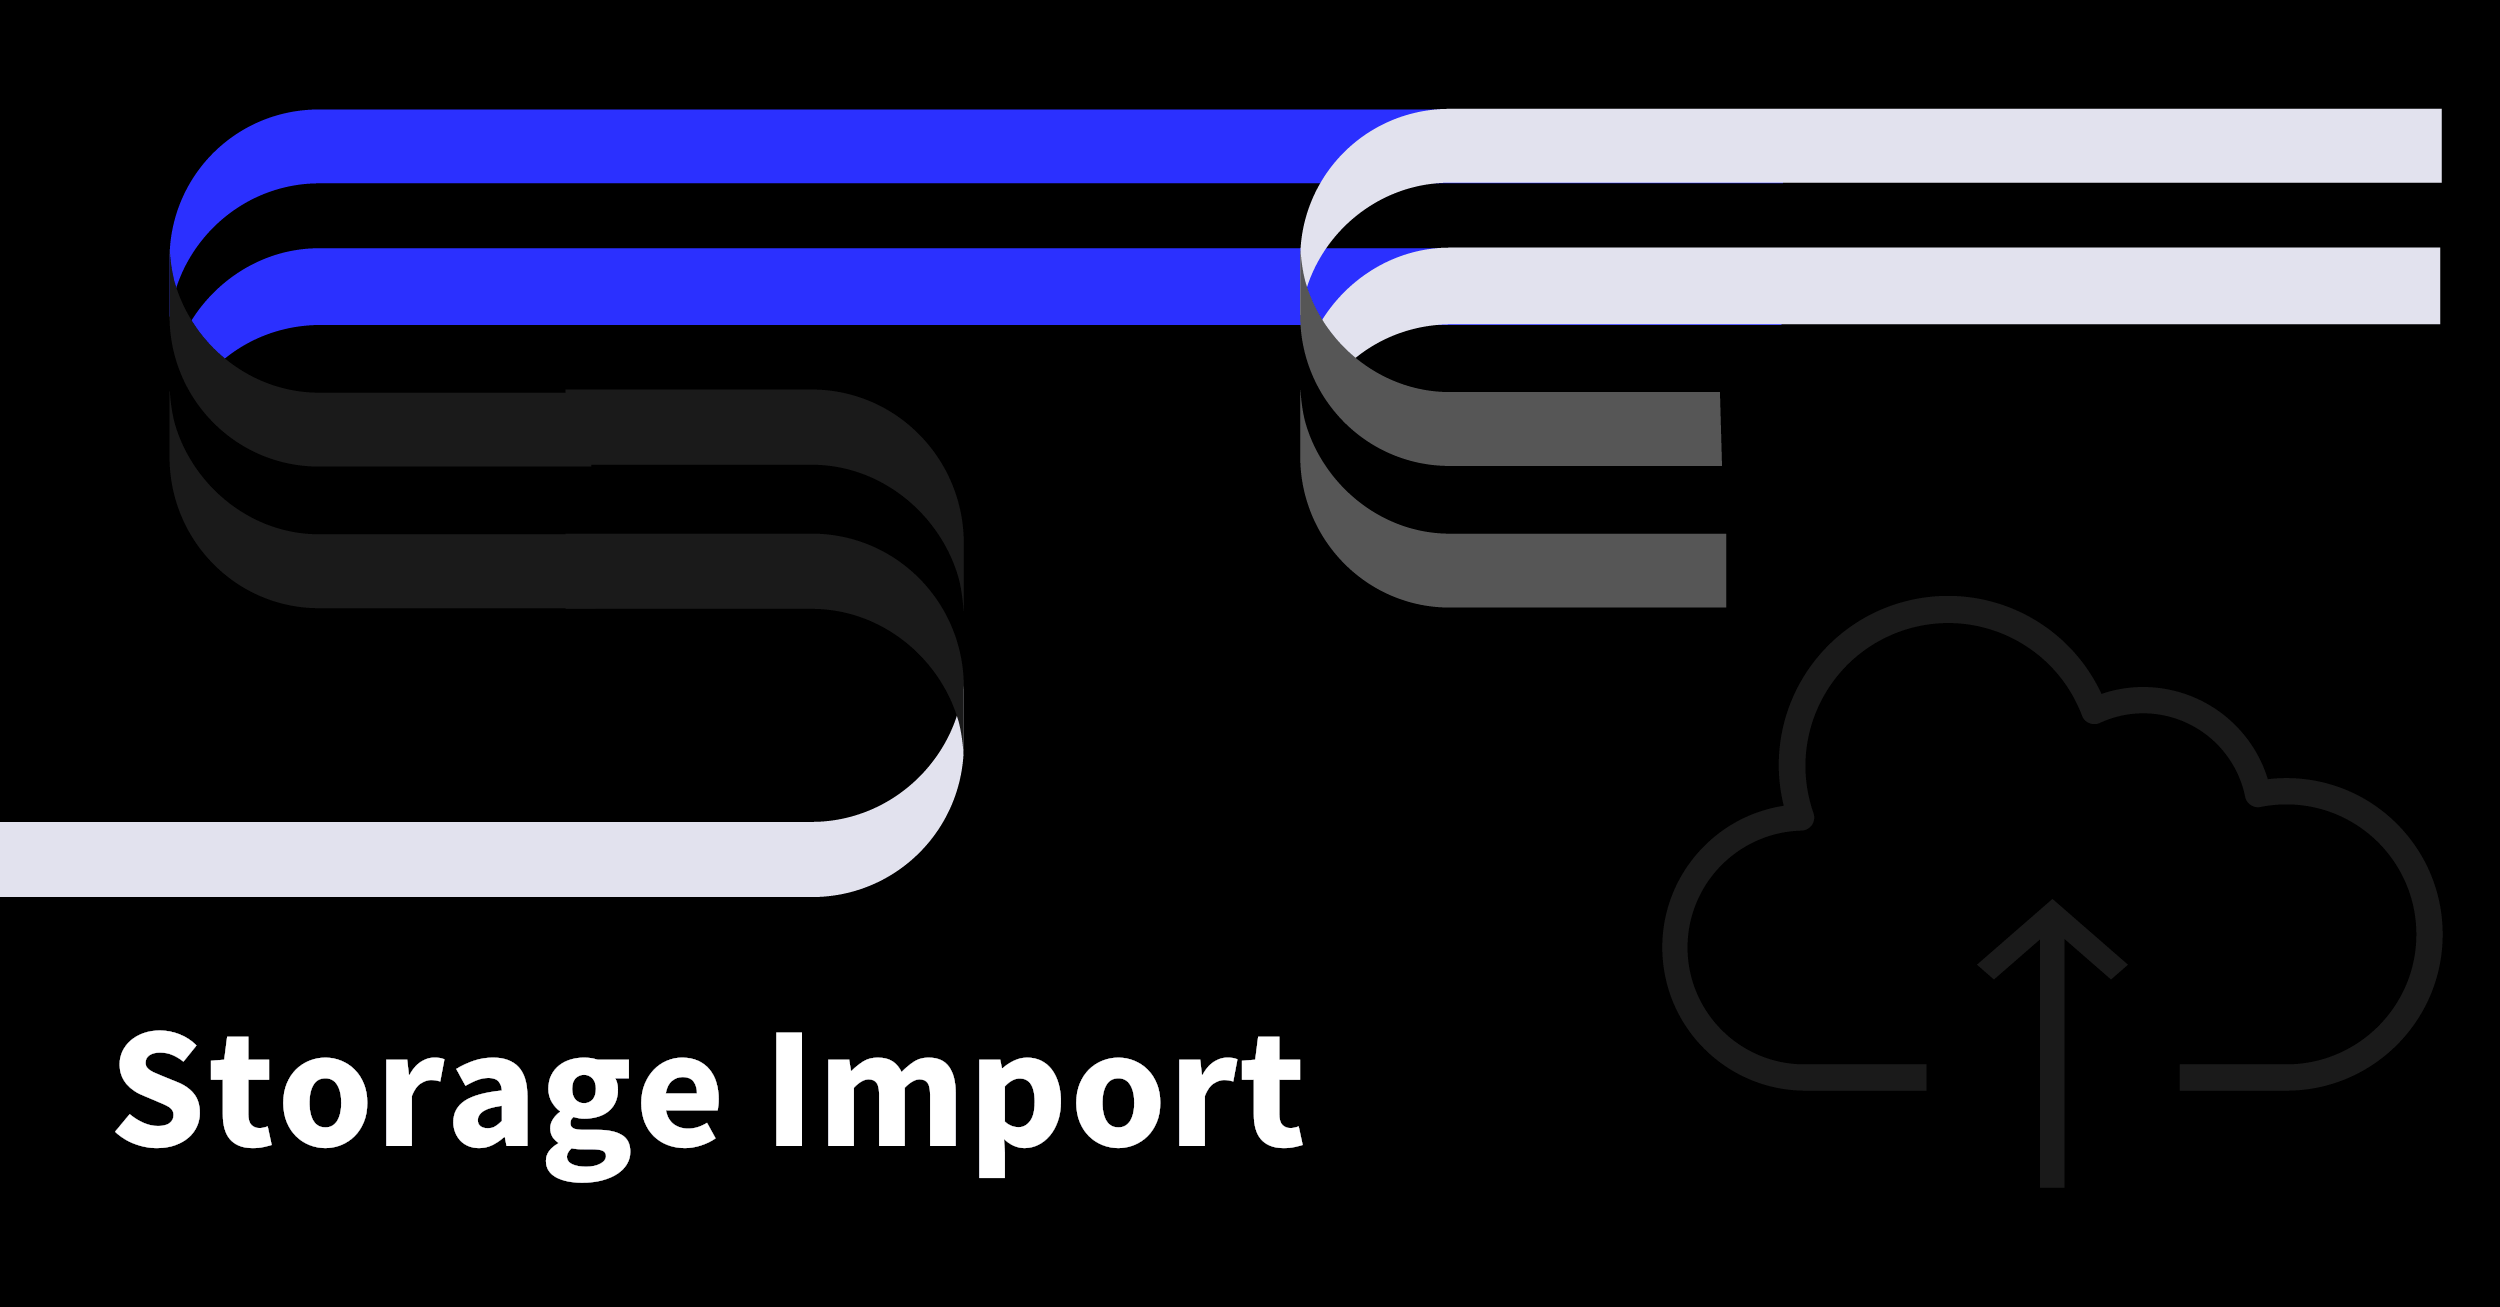 Launching Storage Import